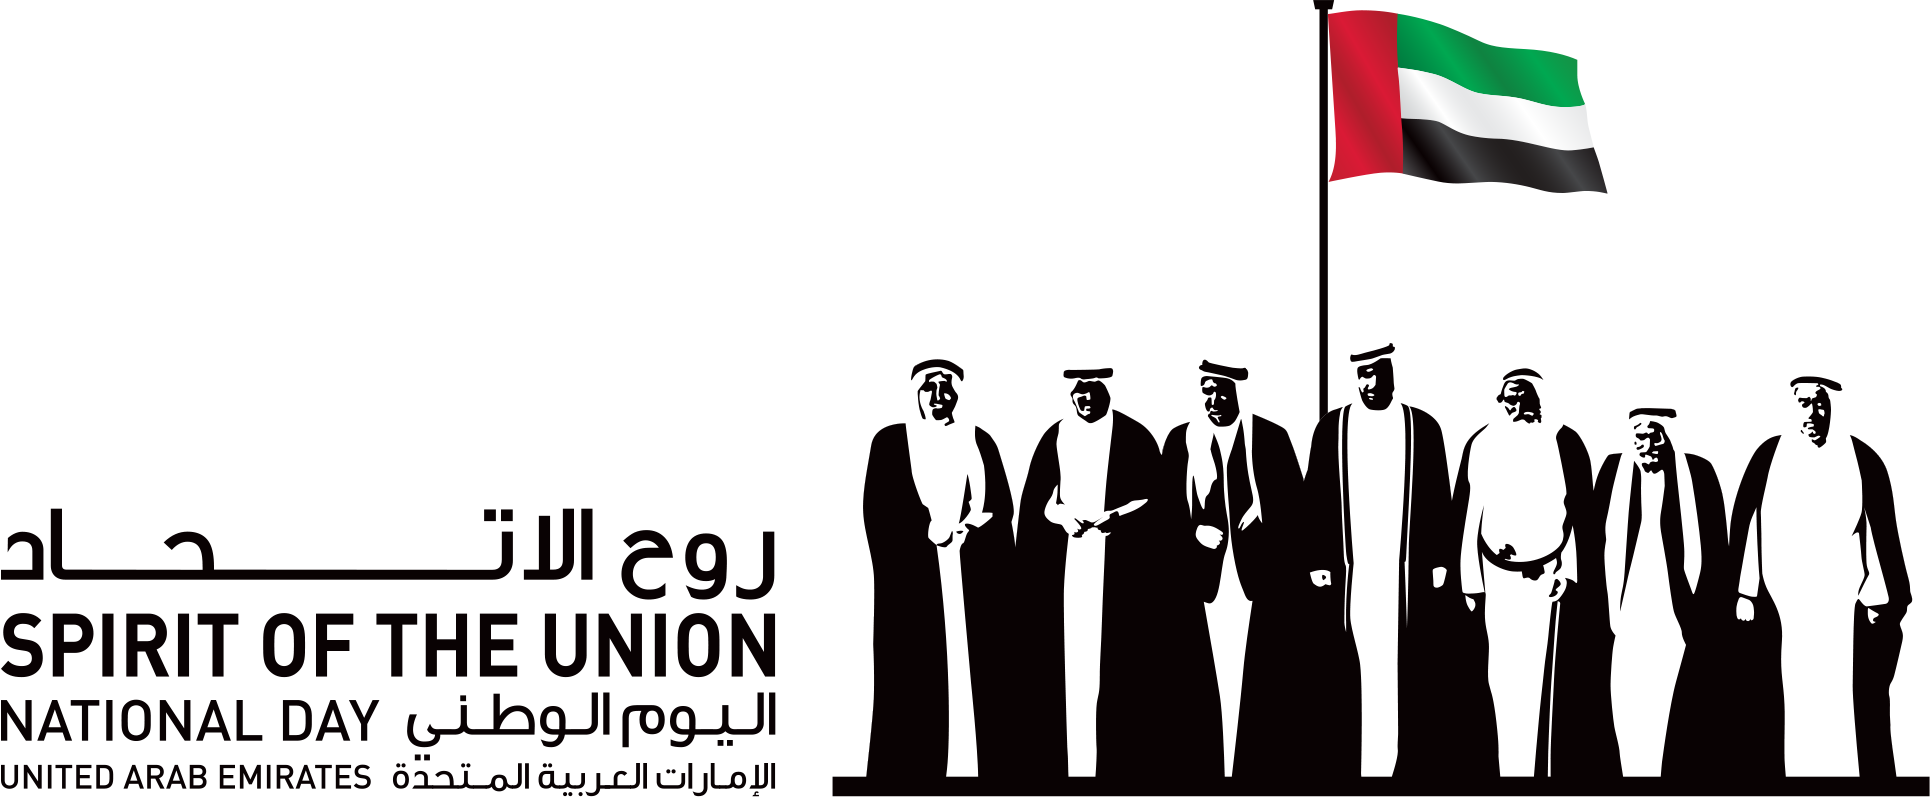 UAE National Day. National Day United arab Emirates. UAE National Day posters. UAE National Day vector.